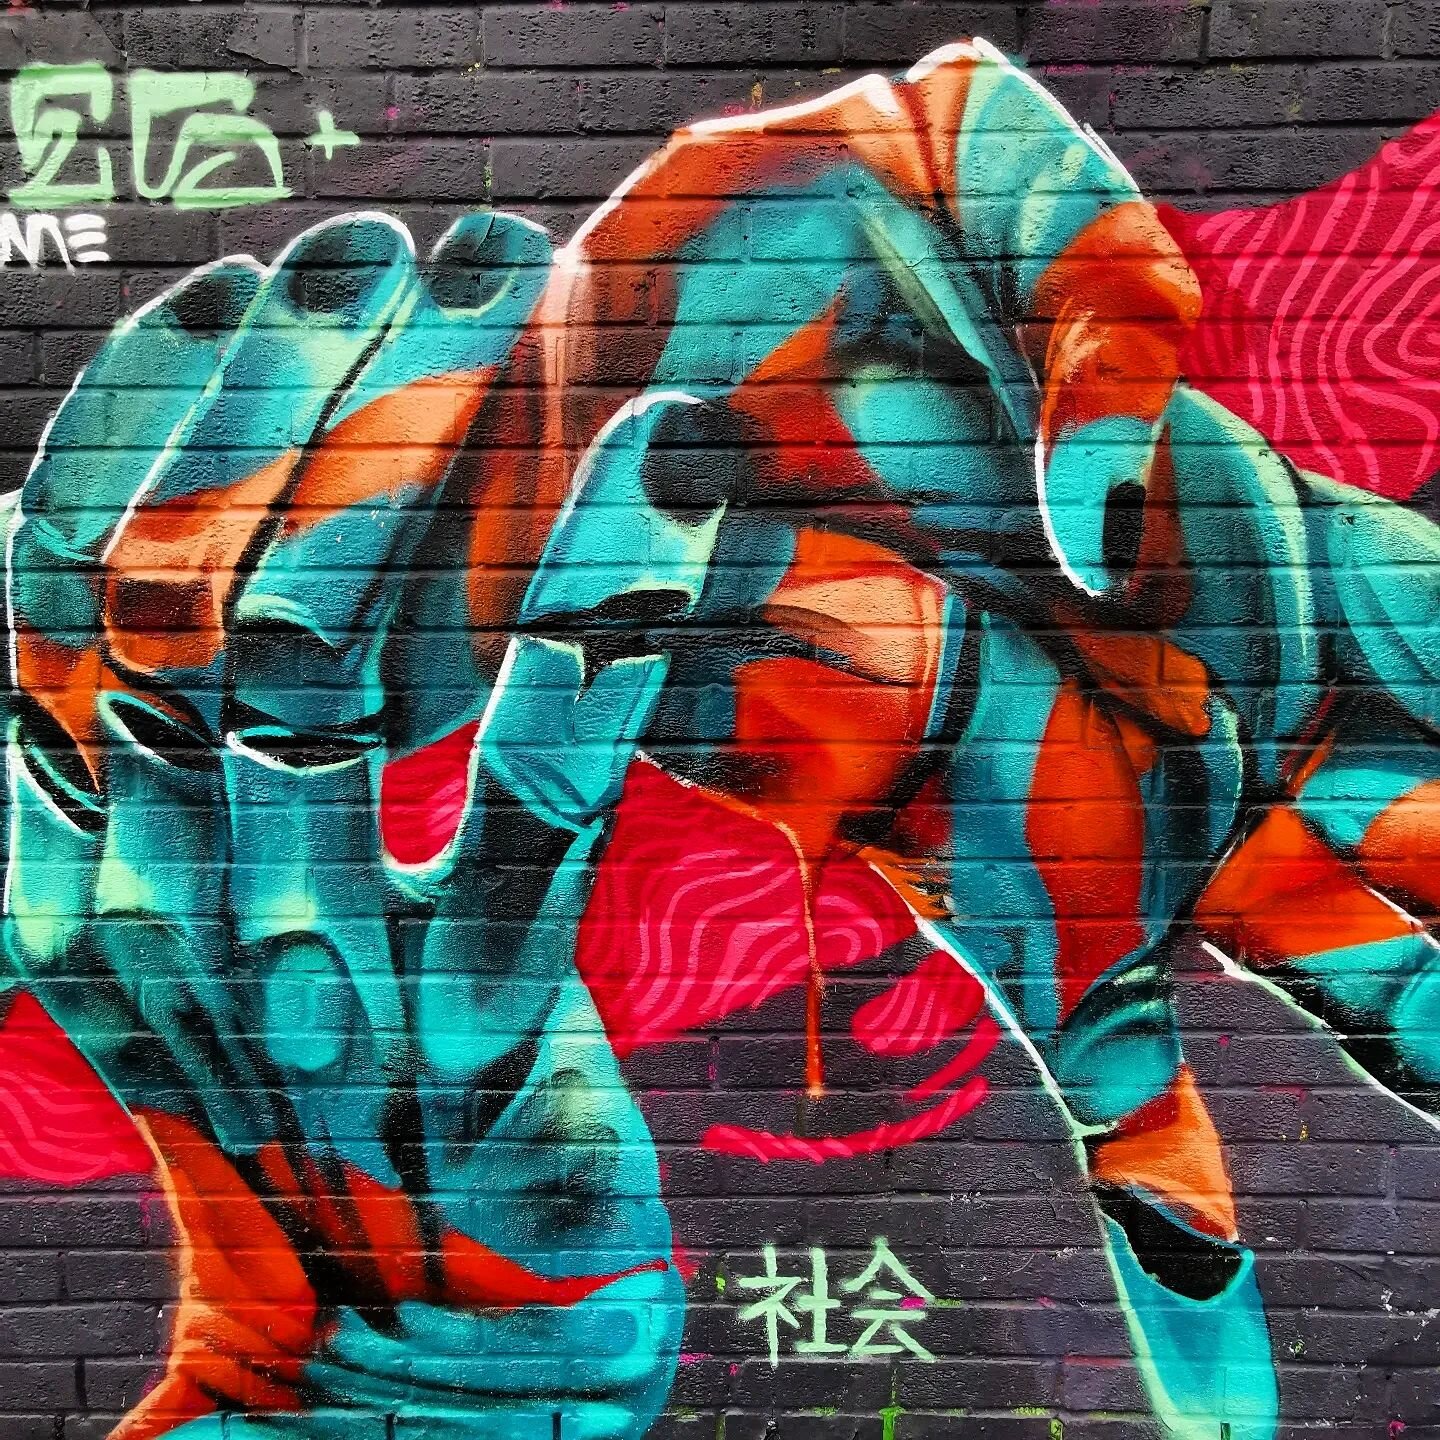 Dem textures. Split hands. Puppet shadows.

#sprayart #spraypaint #muralart #mural #muralpainting #graffiti #graffitiart #streetart #streetartist #drawing #studio #wip